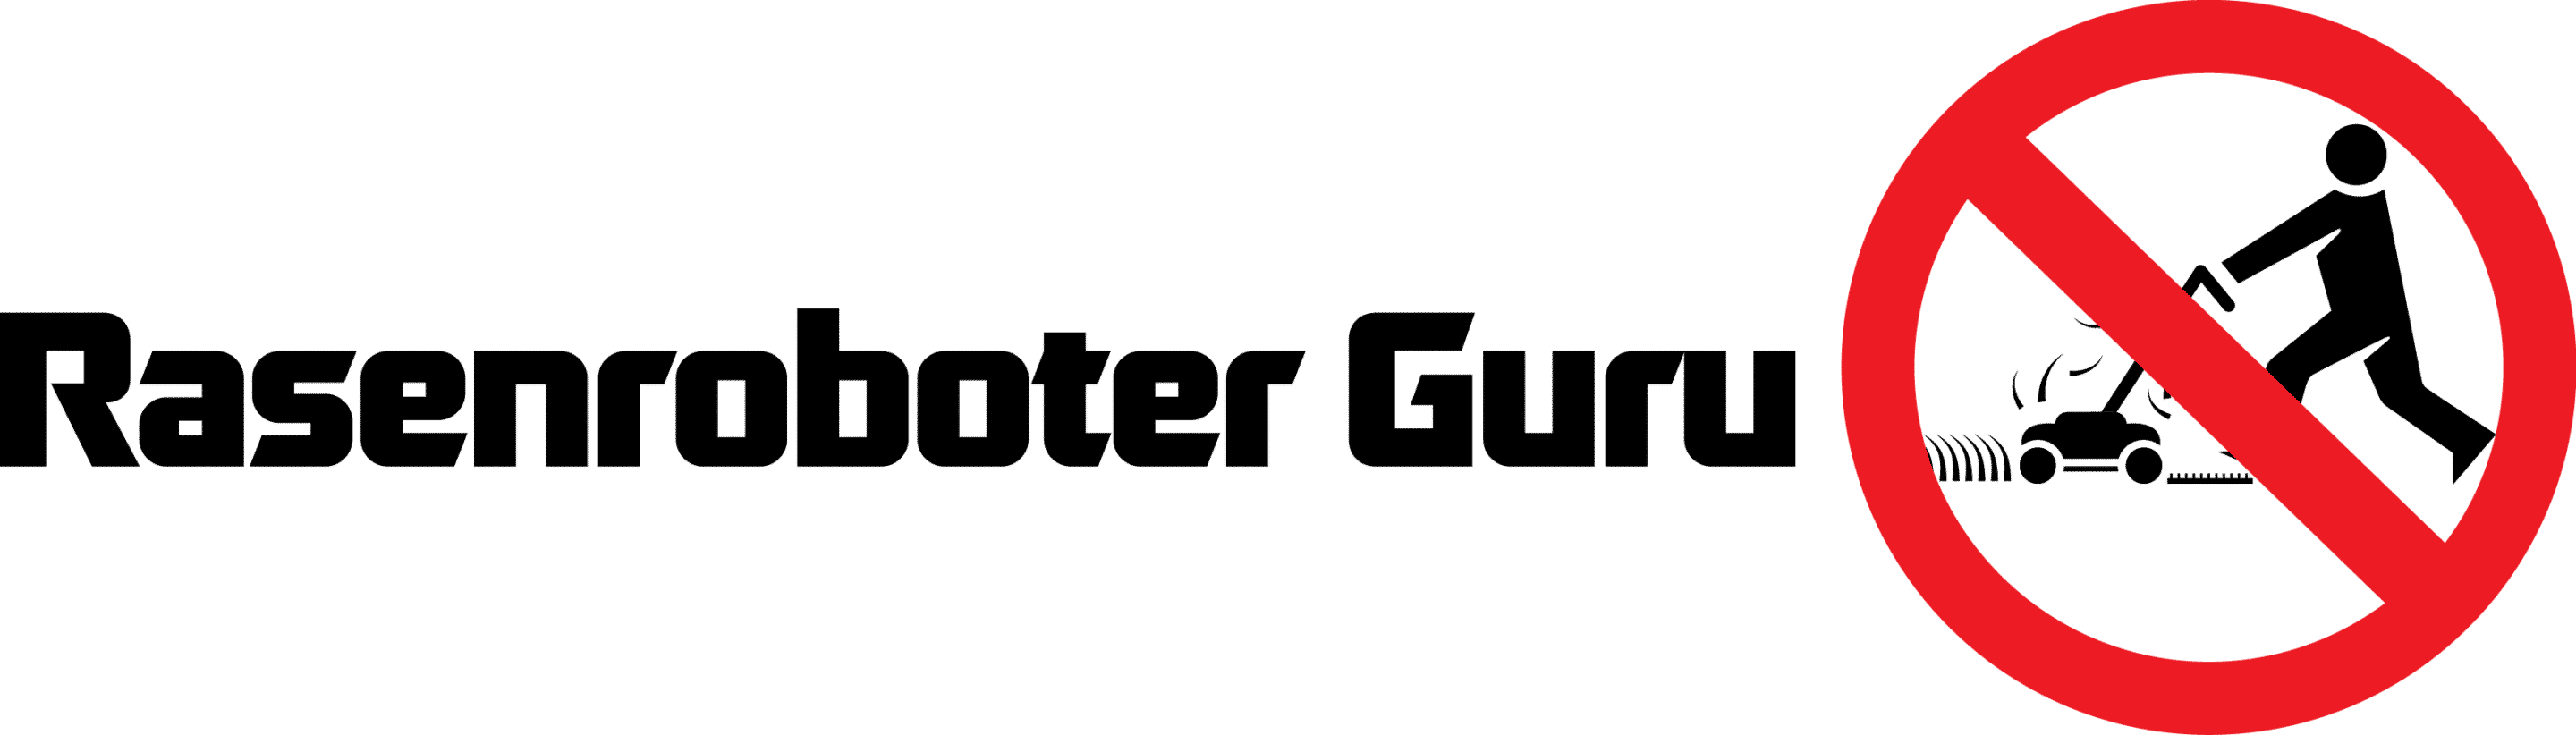 Rasenroboter Guru: Ihr Rasenroboterprofi in Graz und Leibnitz